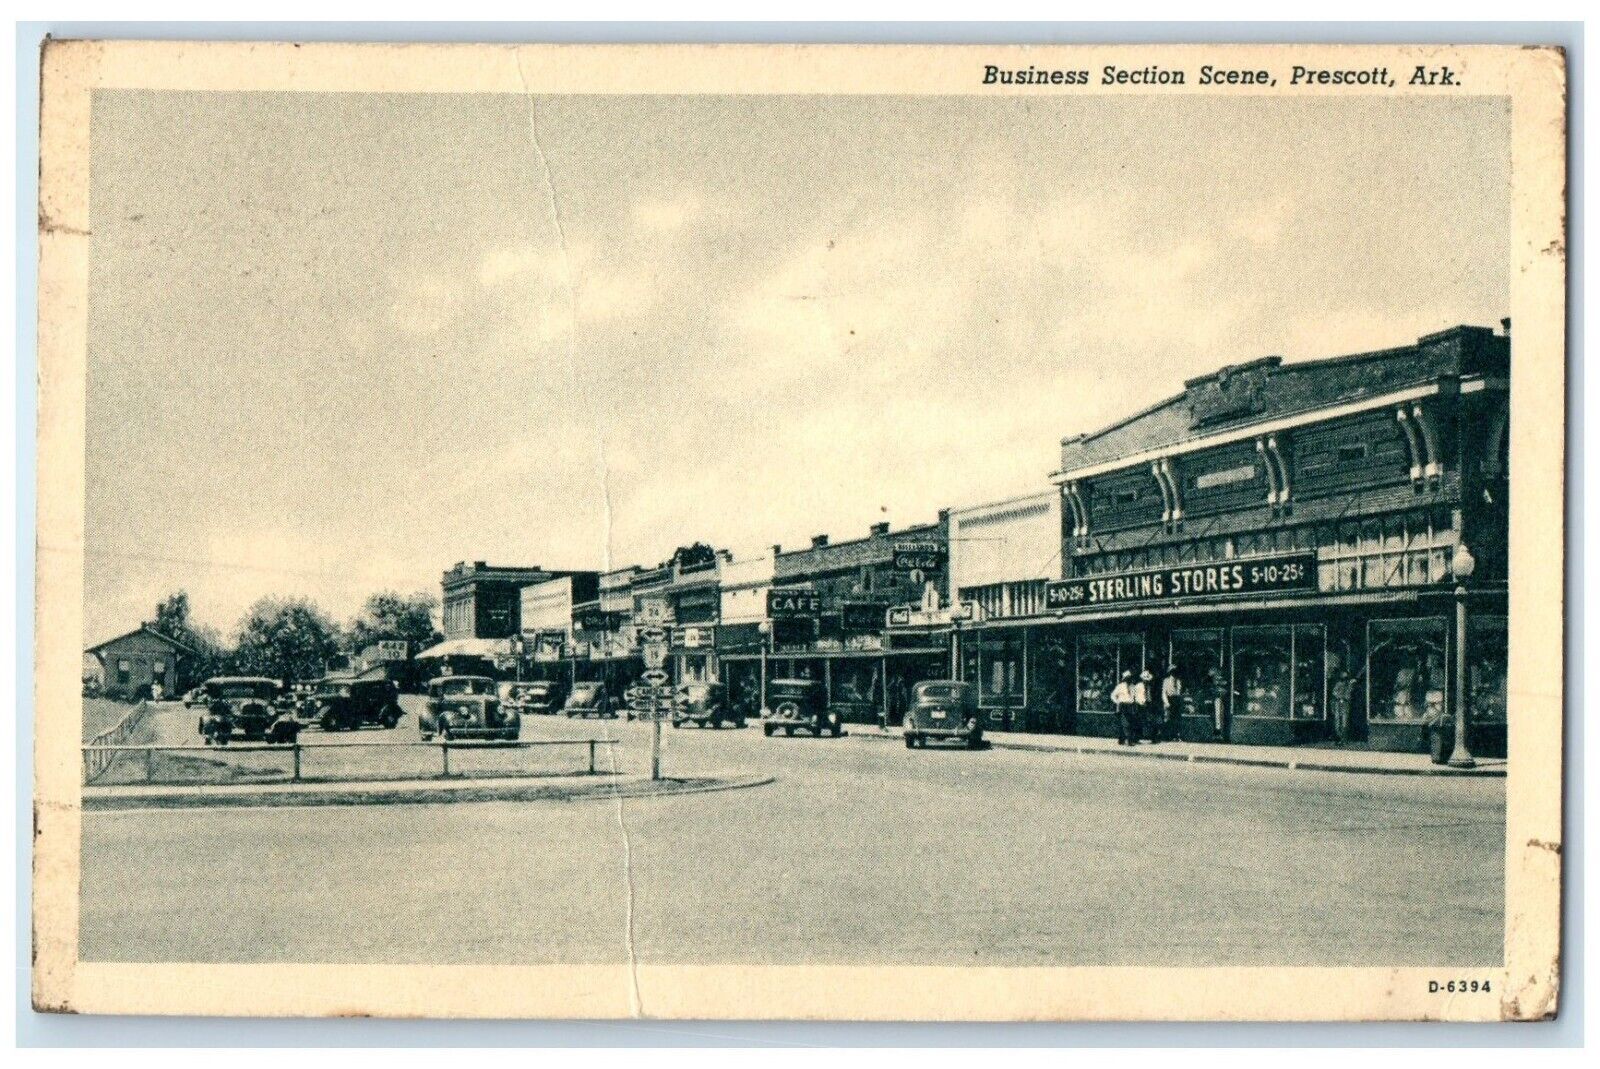 Prescott Arkansas Postcard Business Section Scene Exterior Building 1943 Vintage